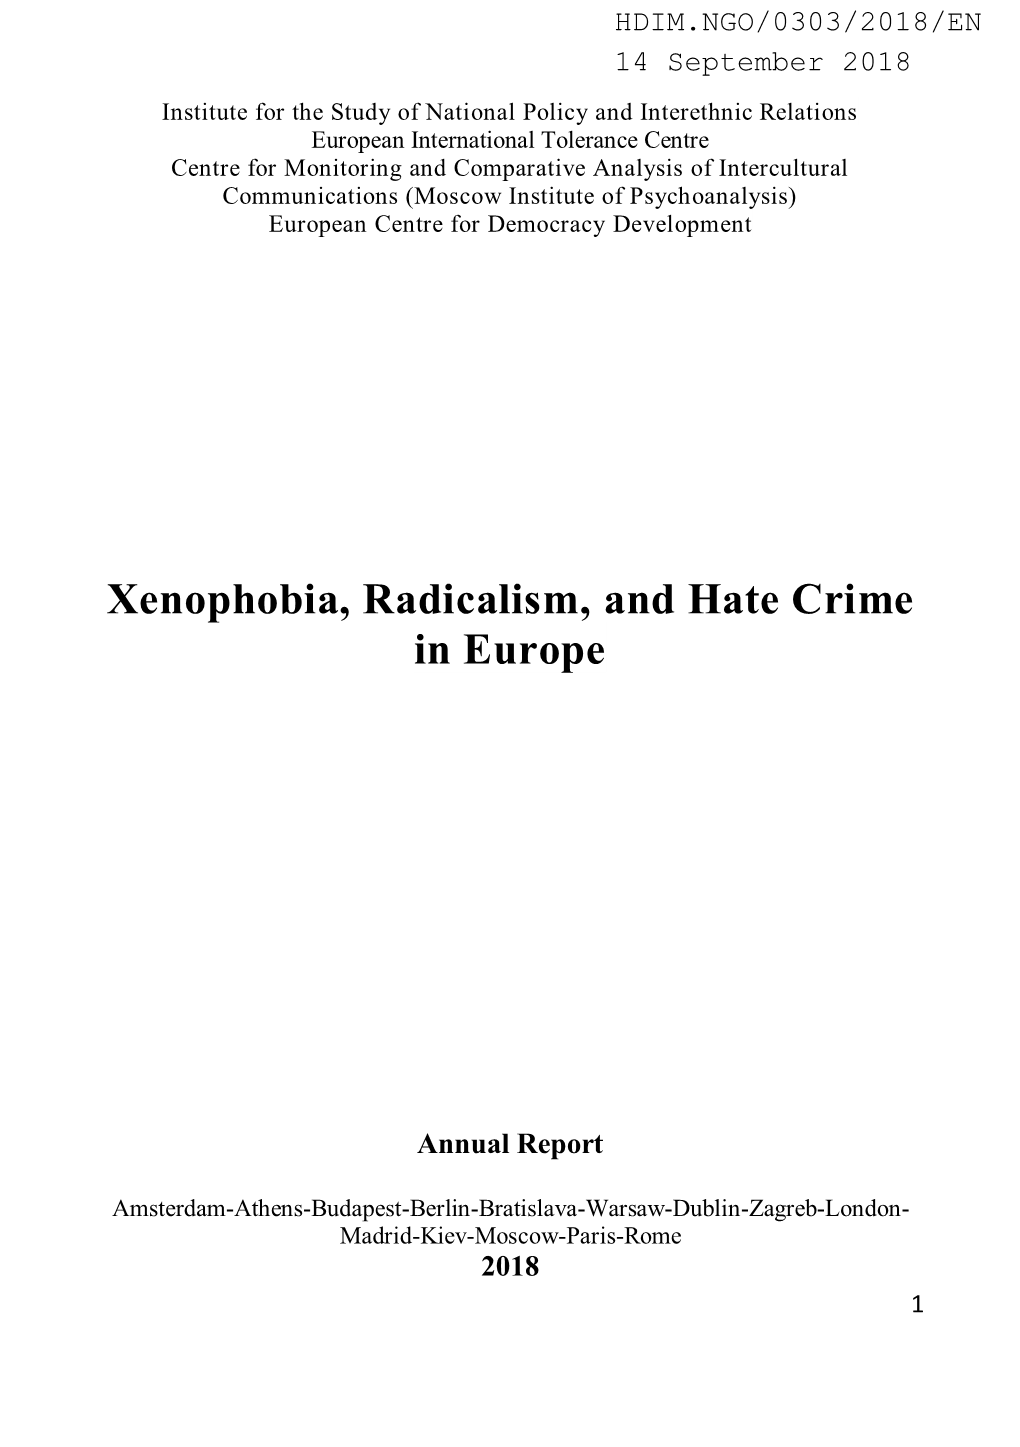 Xenophobia, Radicalism, and Hate Crime in Europe